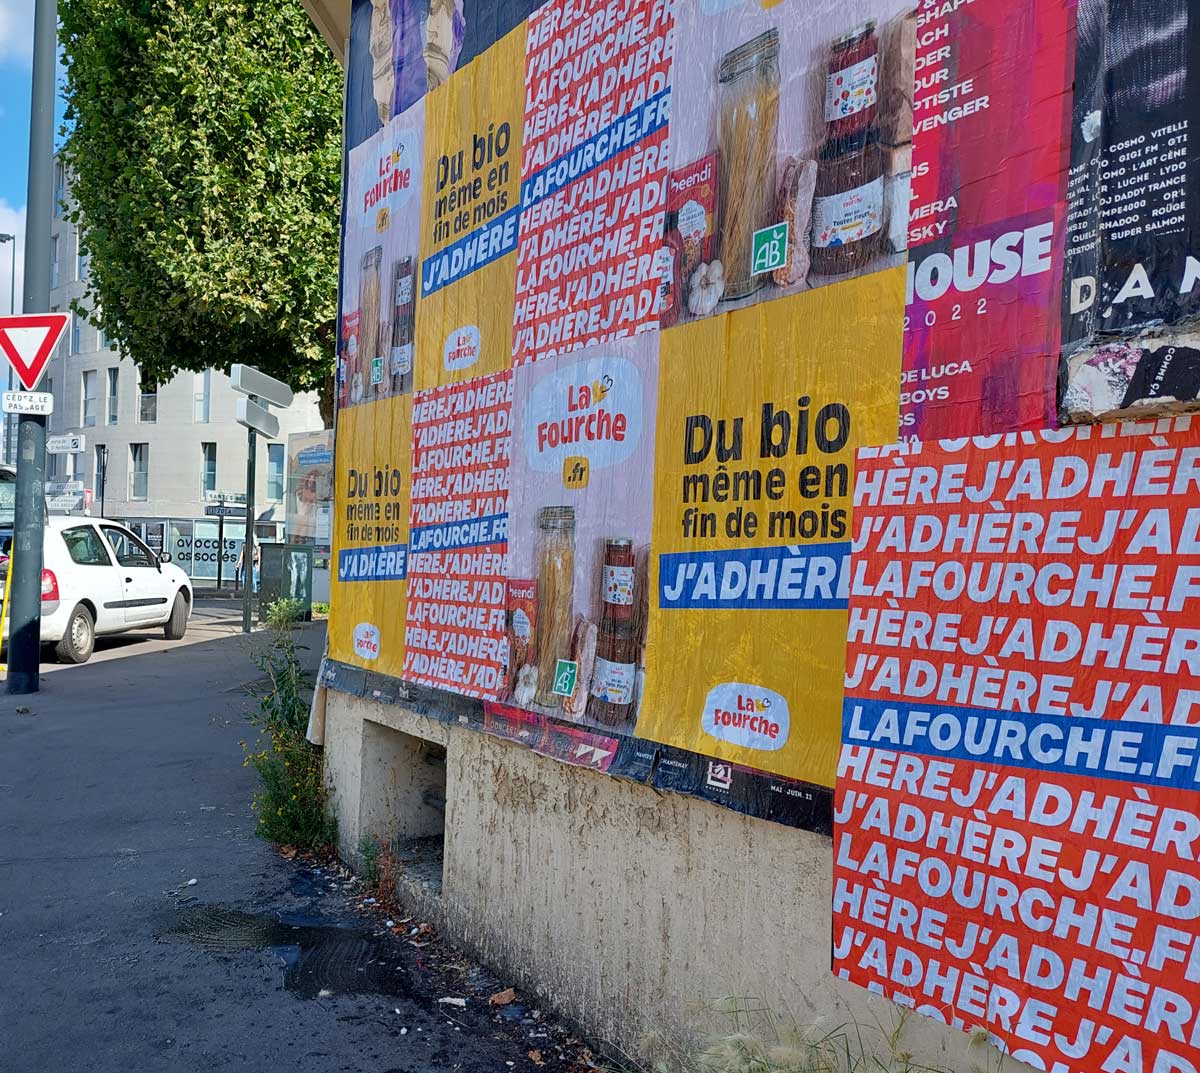 La-fourche-affichage-sauvage-libre-tapage-medias-street-guerilla-marketing-campagne-publicitaire